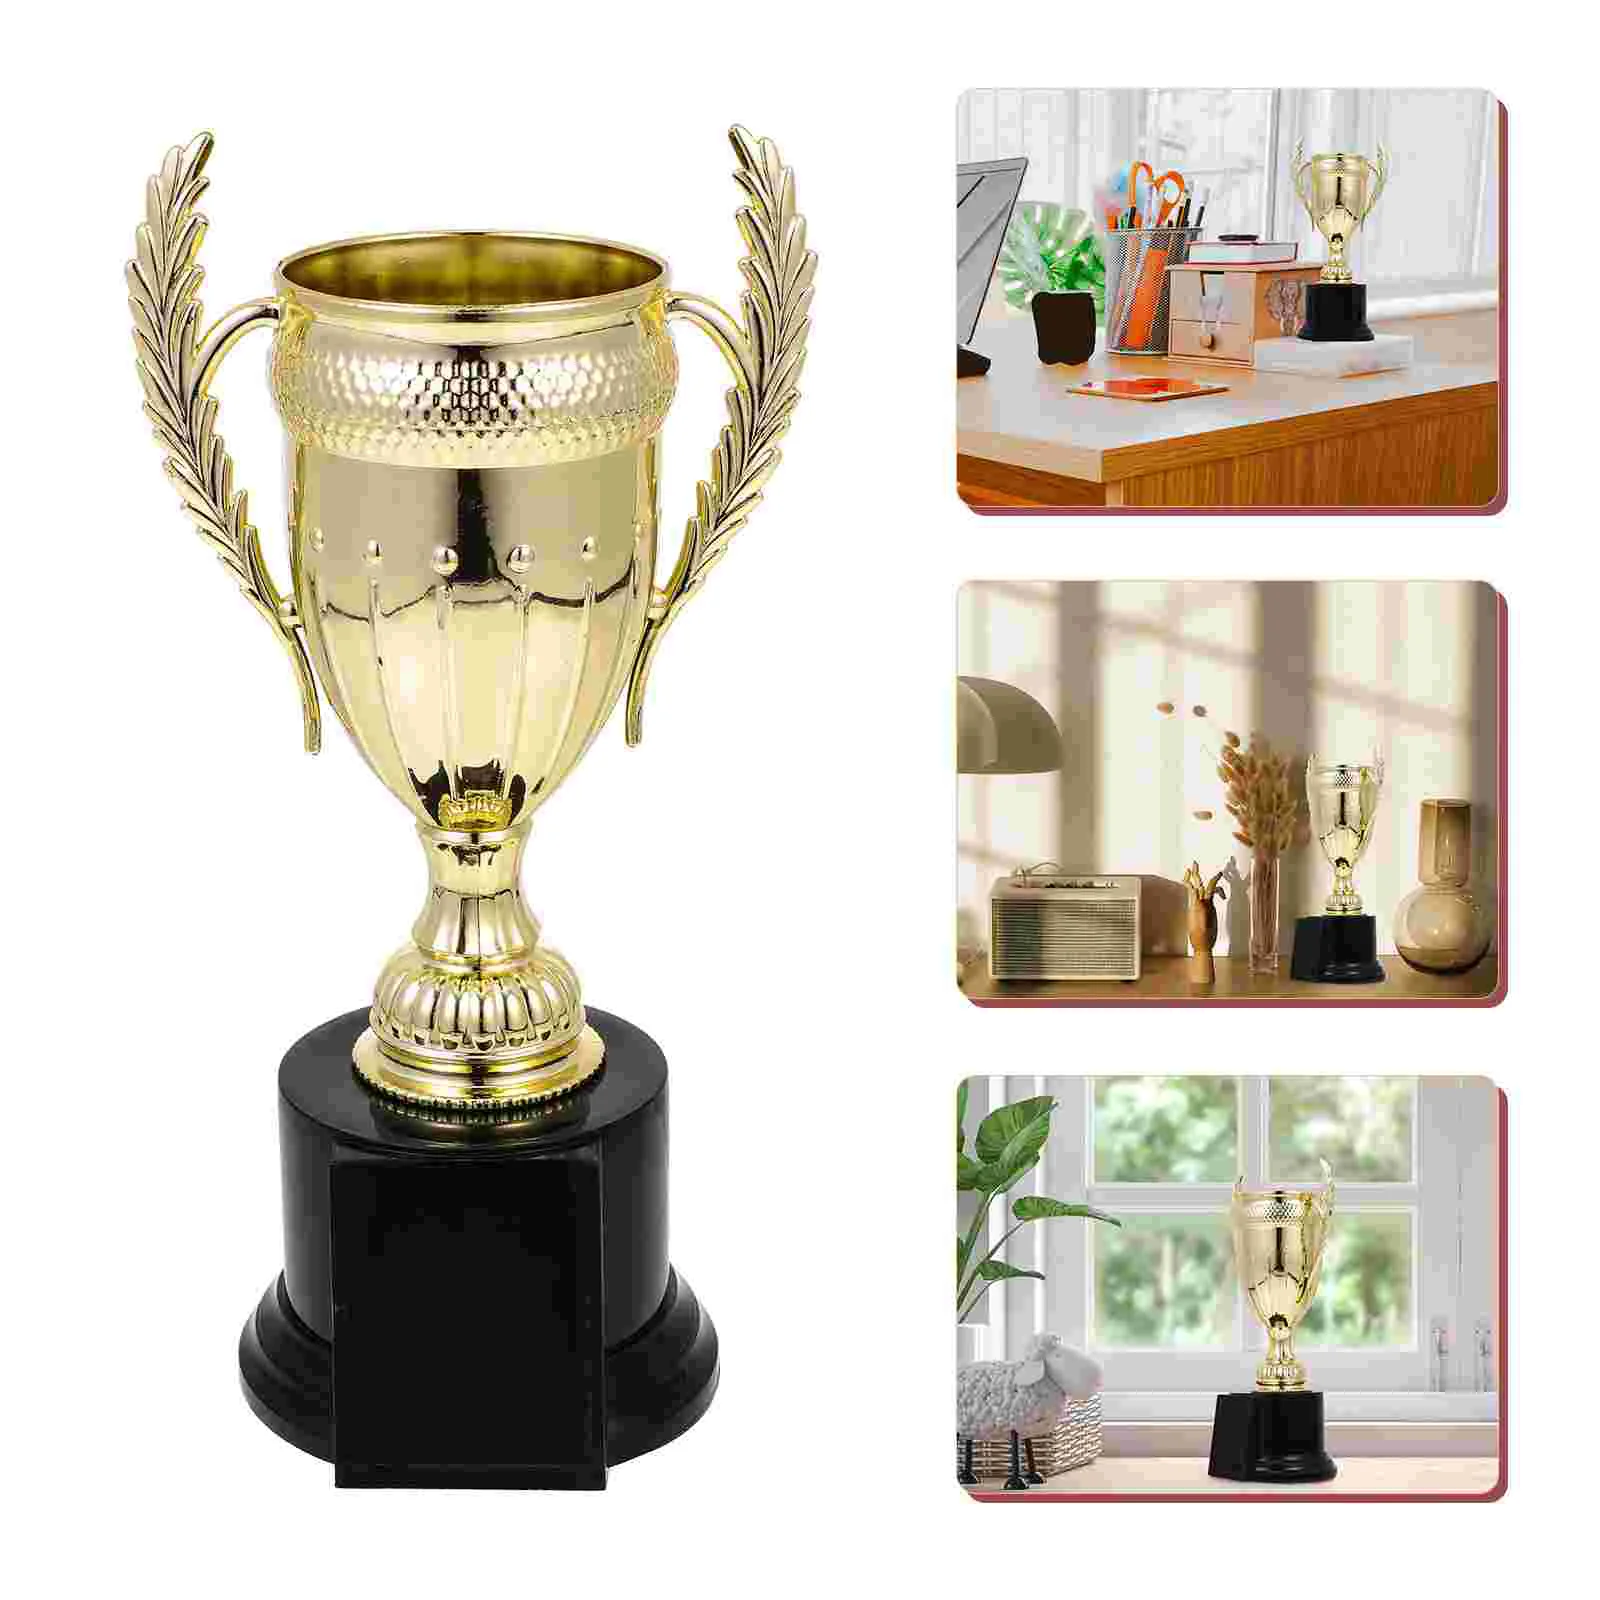 

Children's Trophy Cup Decorative Golden Mini Footballs Small Pvc Sports Competition Contest Reward Baseballs Soccer trophies